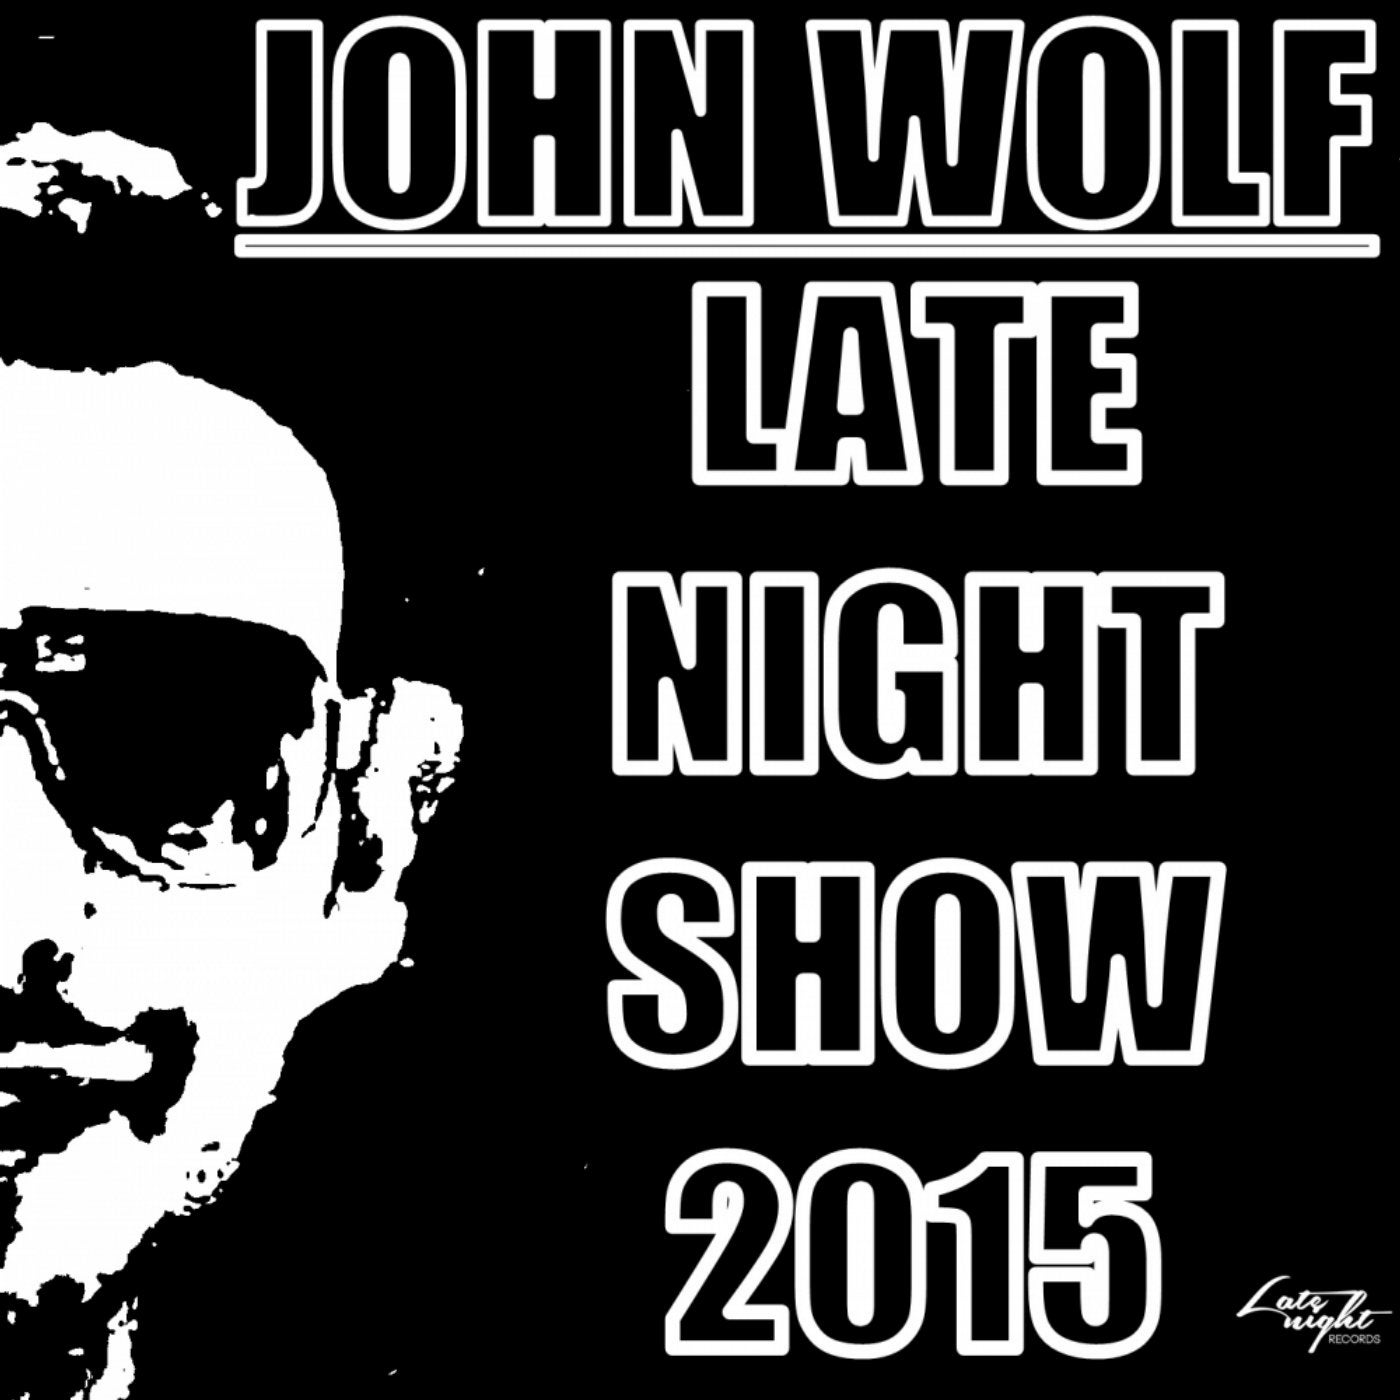 Late Night Show 2015